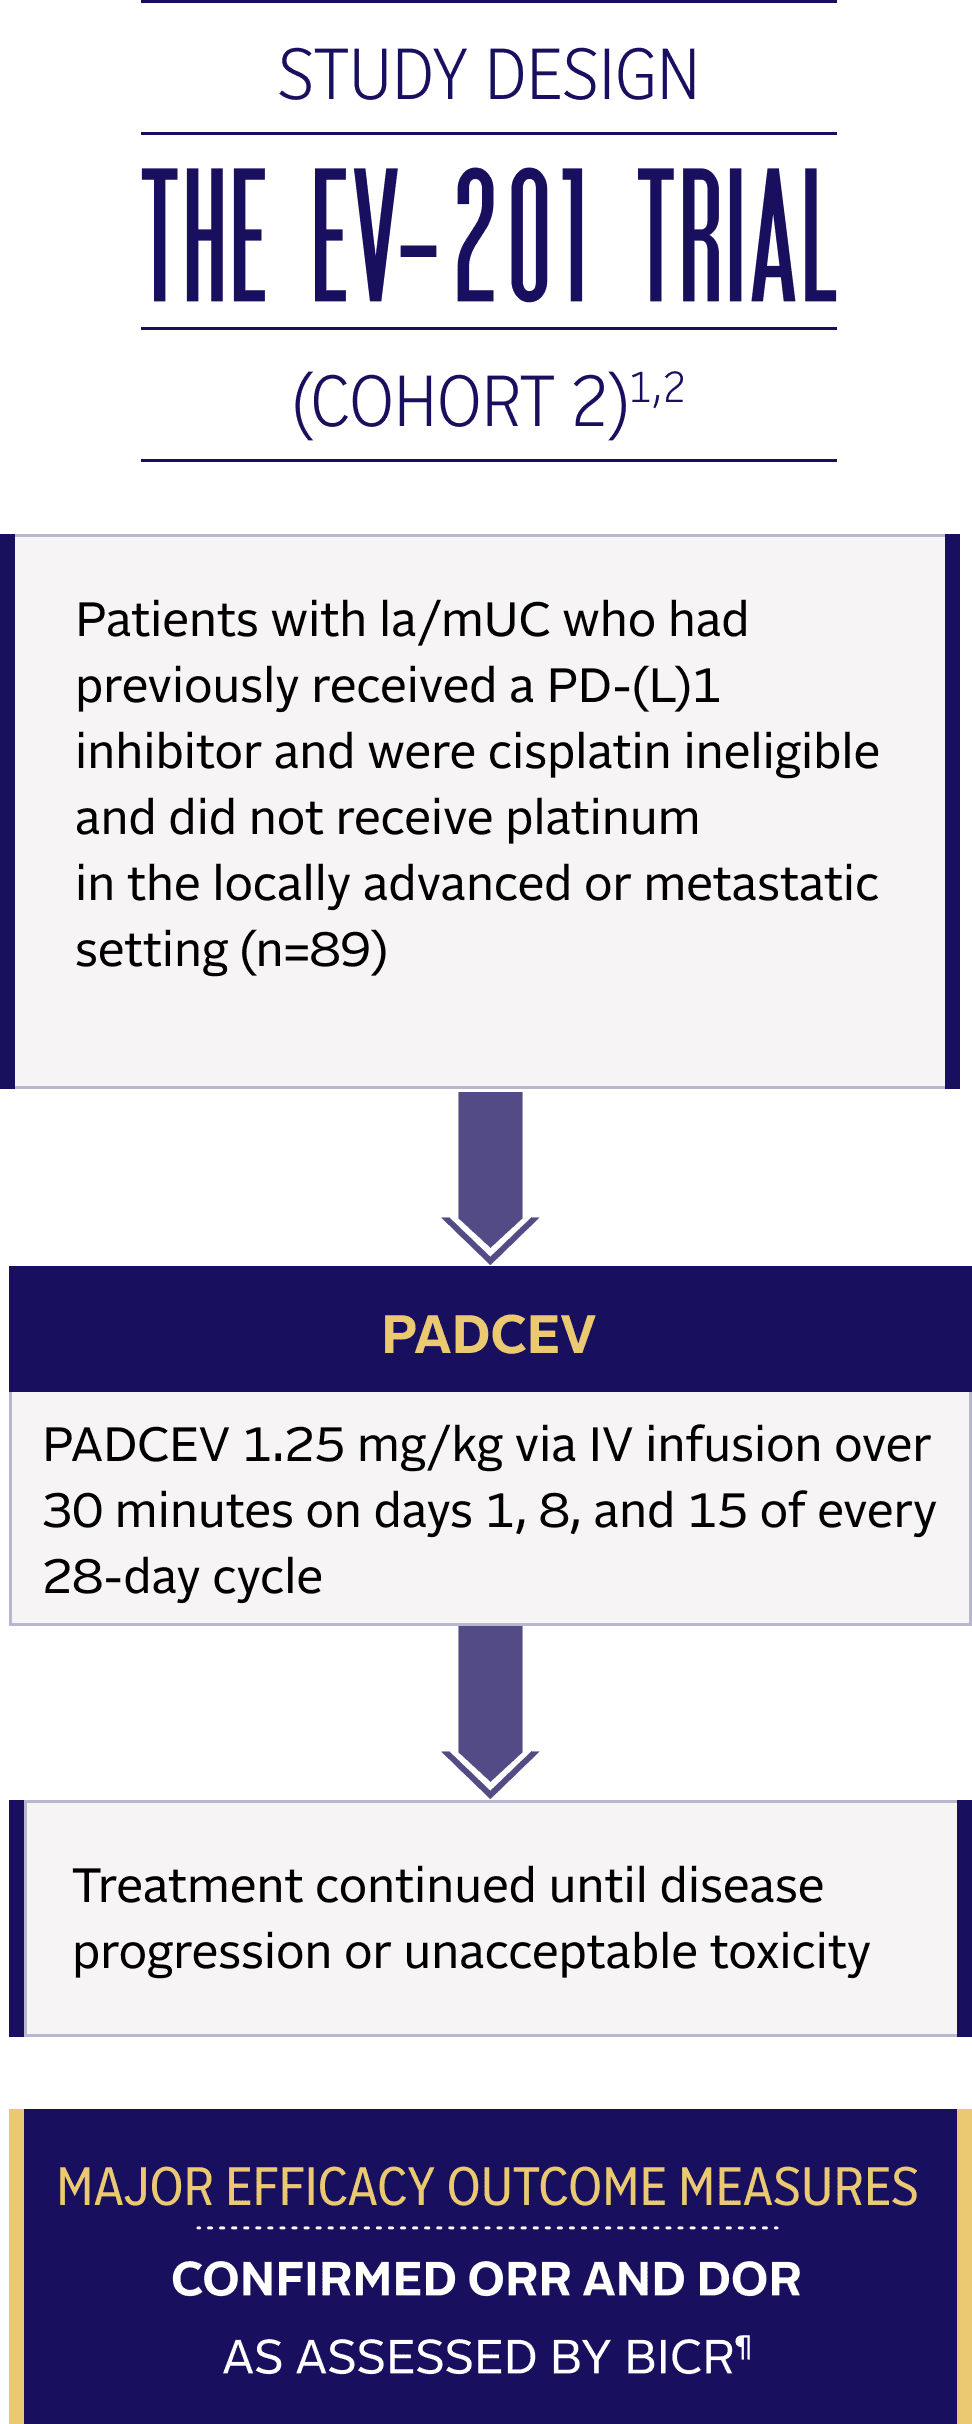 PADCEV EV-201 trial study design.